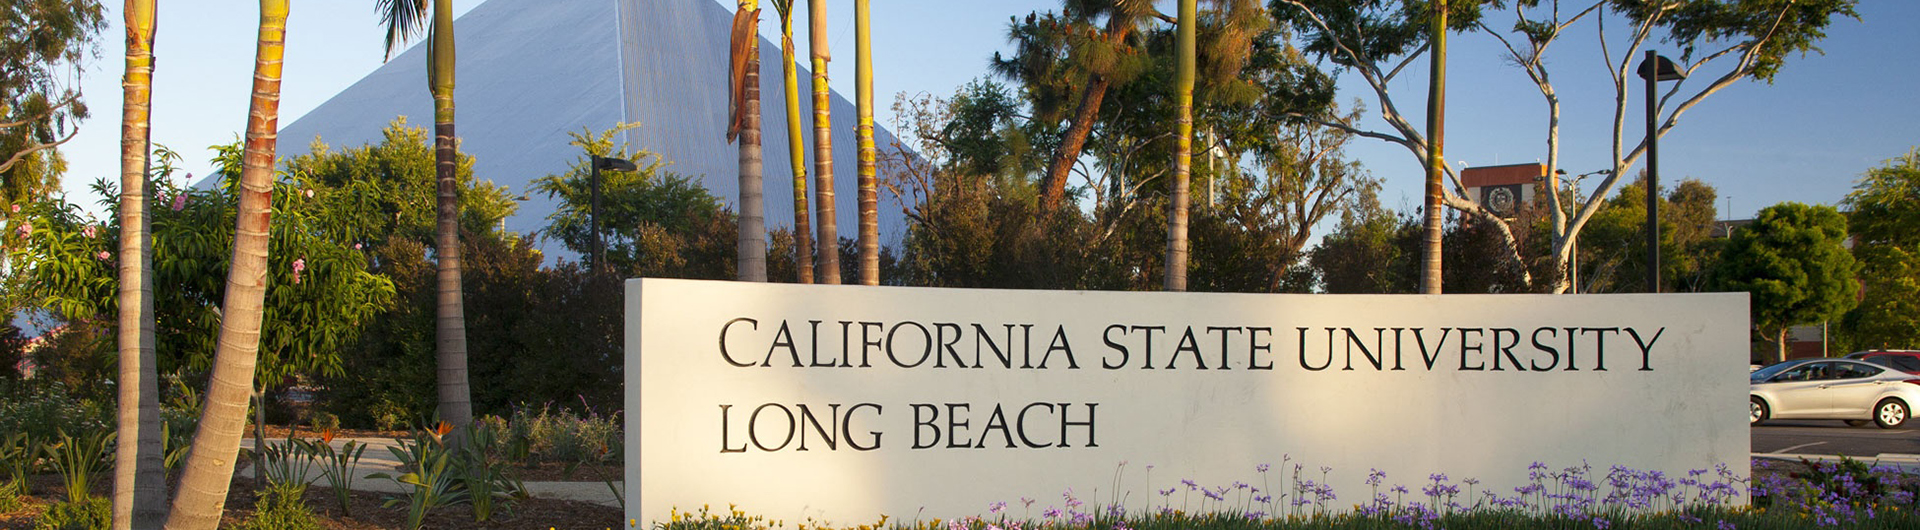 California State University Long beach